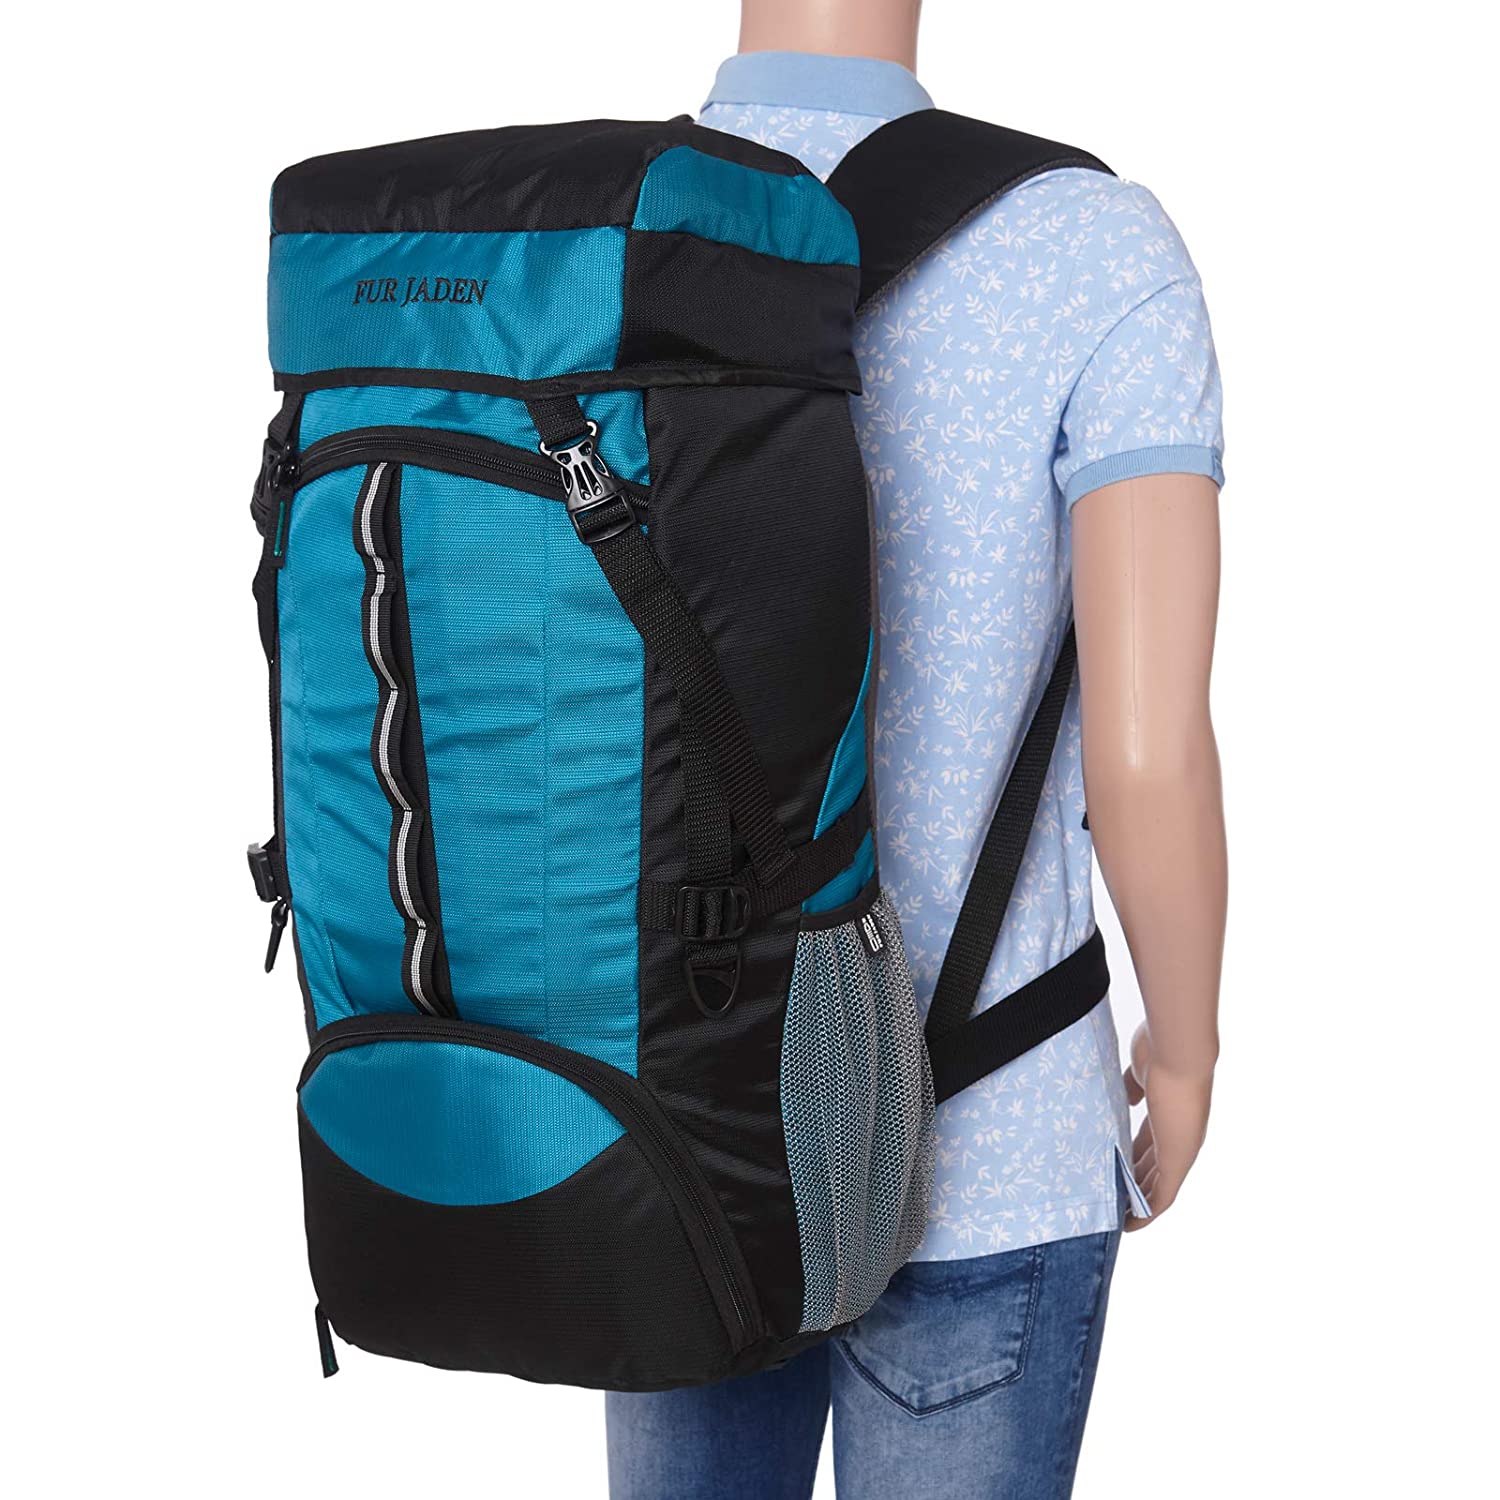 Fur Jaden 55 LTR Trekking Hiking Sports Travel Rucksack Backpack with Shoe Compartment